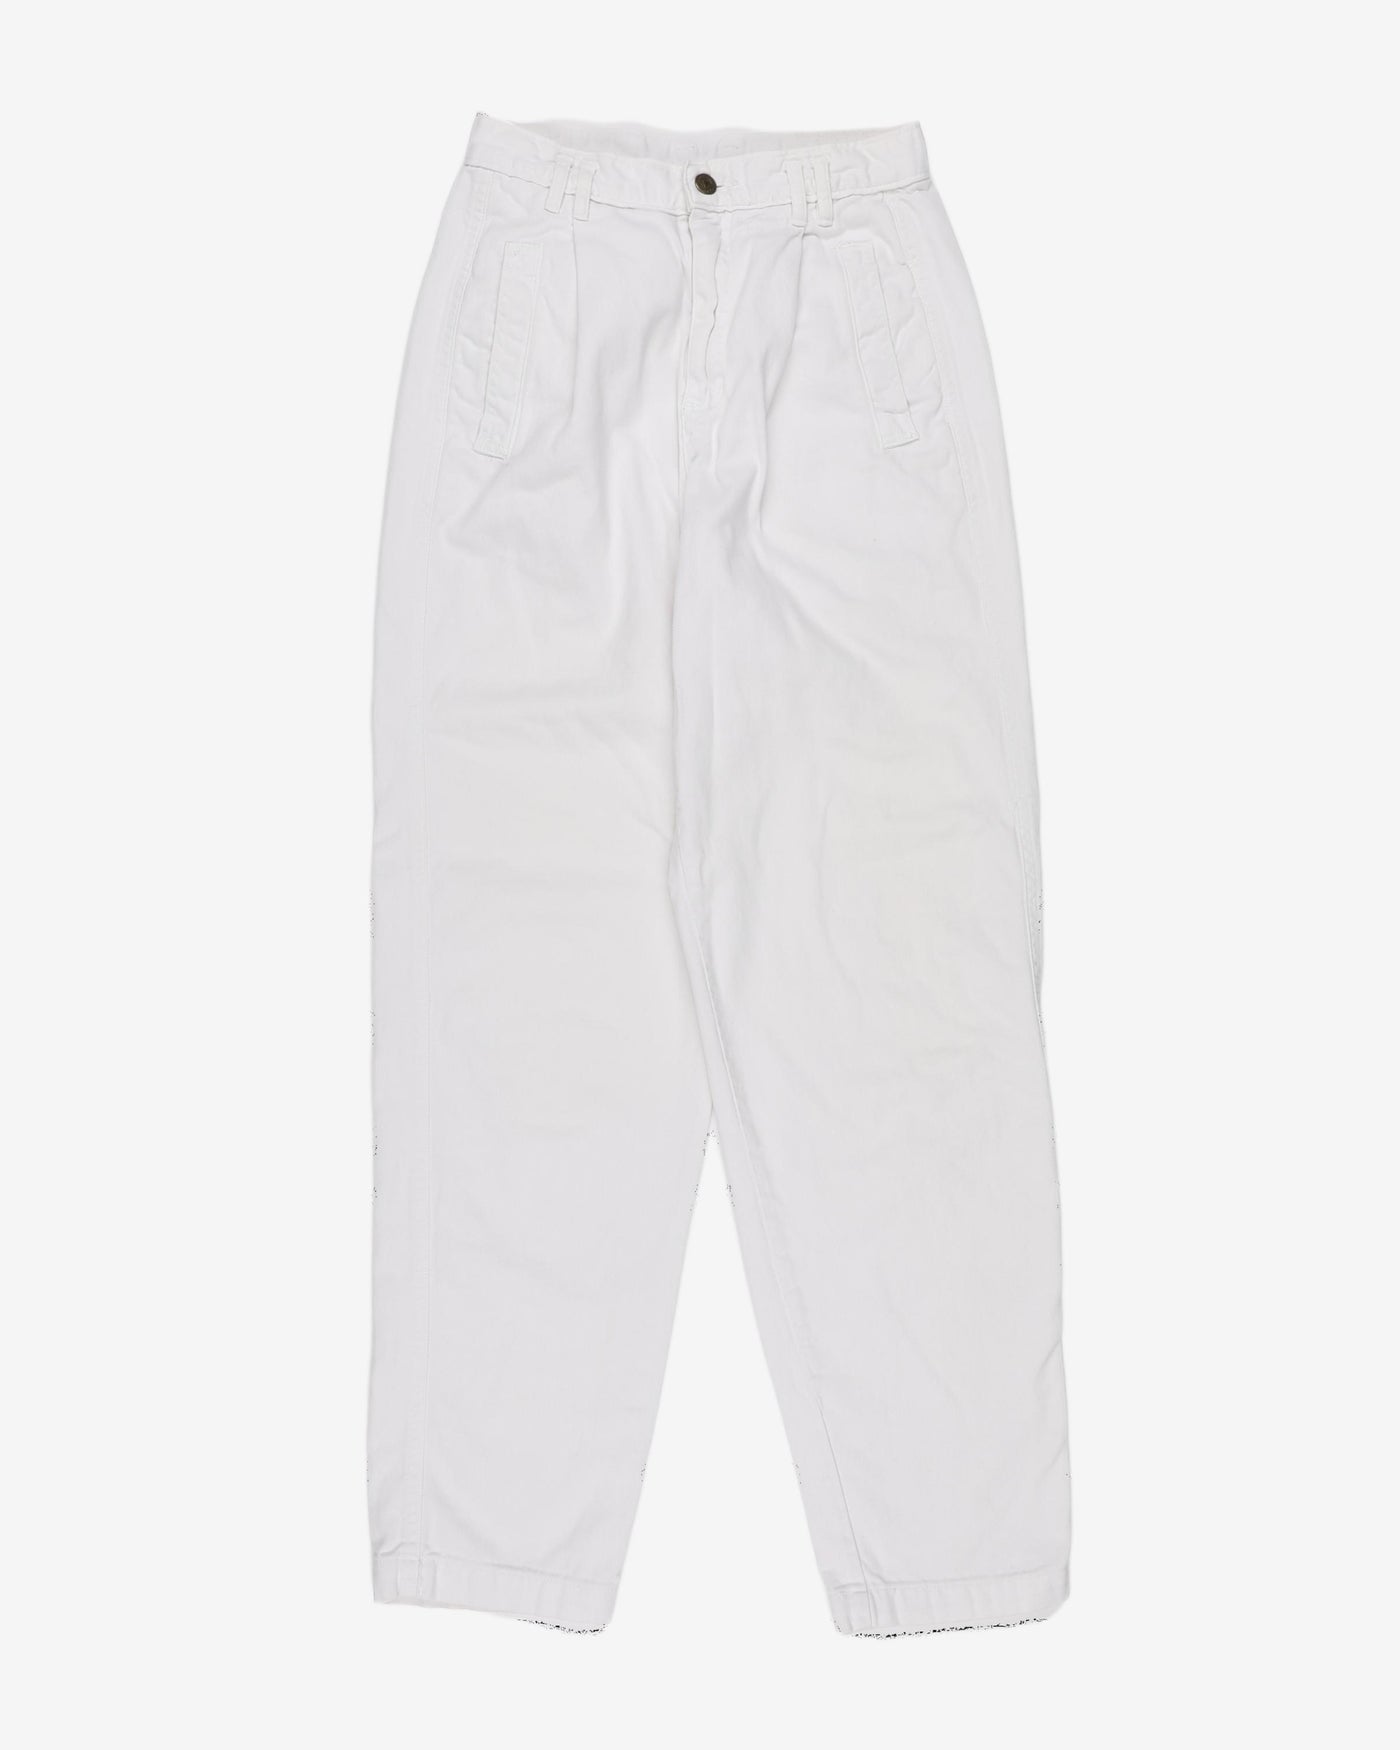 Lizwear White High Waist Tapered Trousers - W26 L30